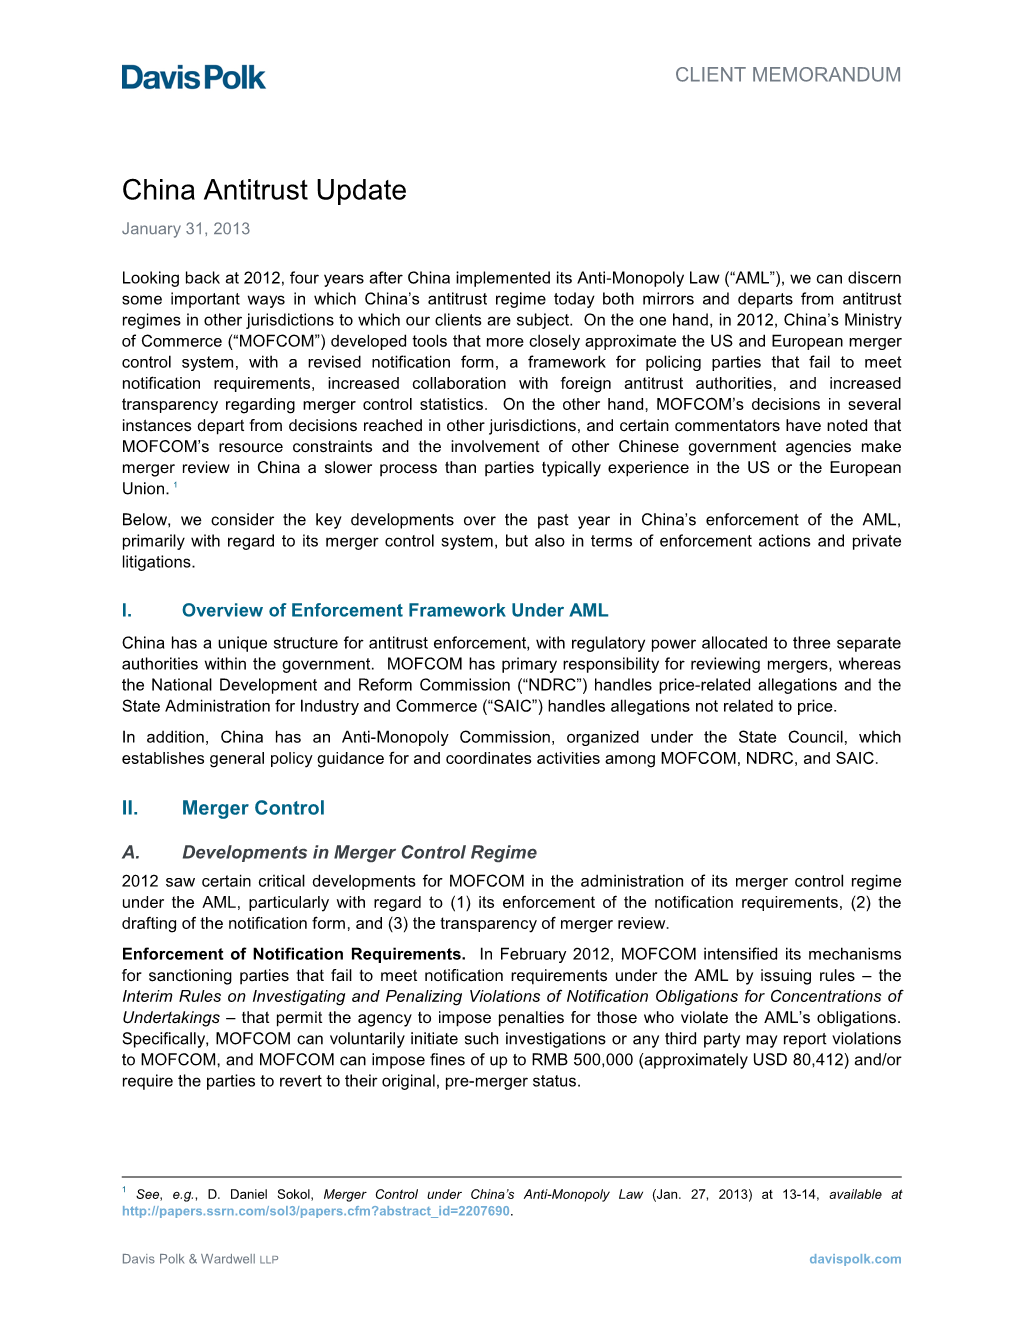 China Antitrust Update January 31, 2013